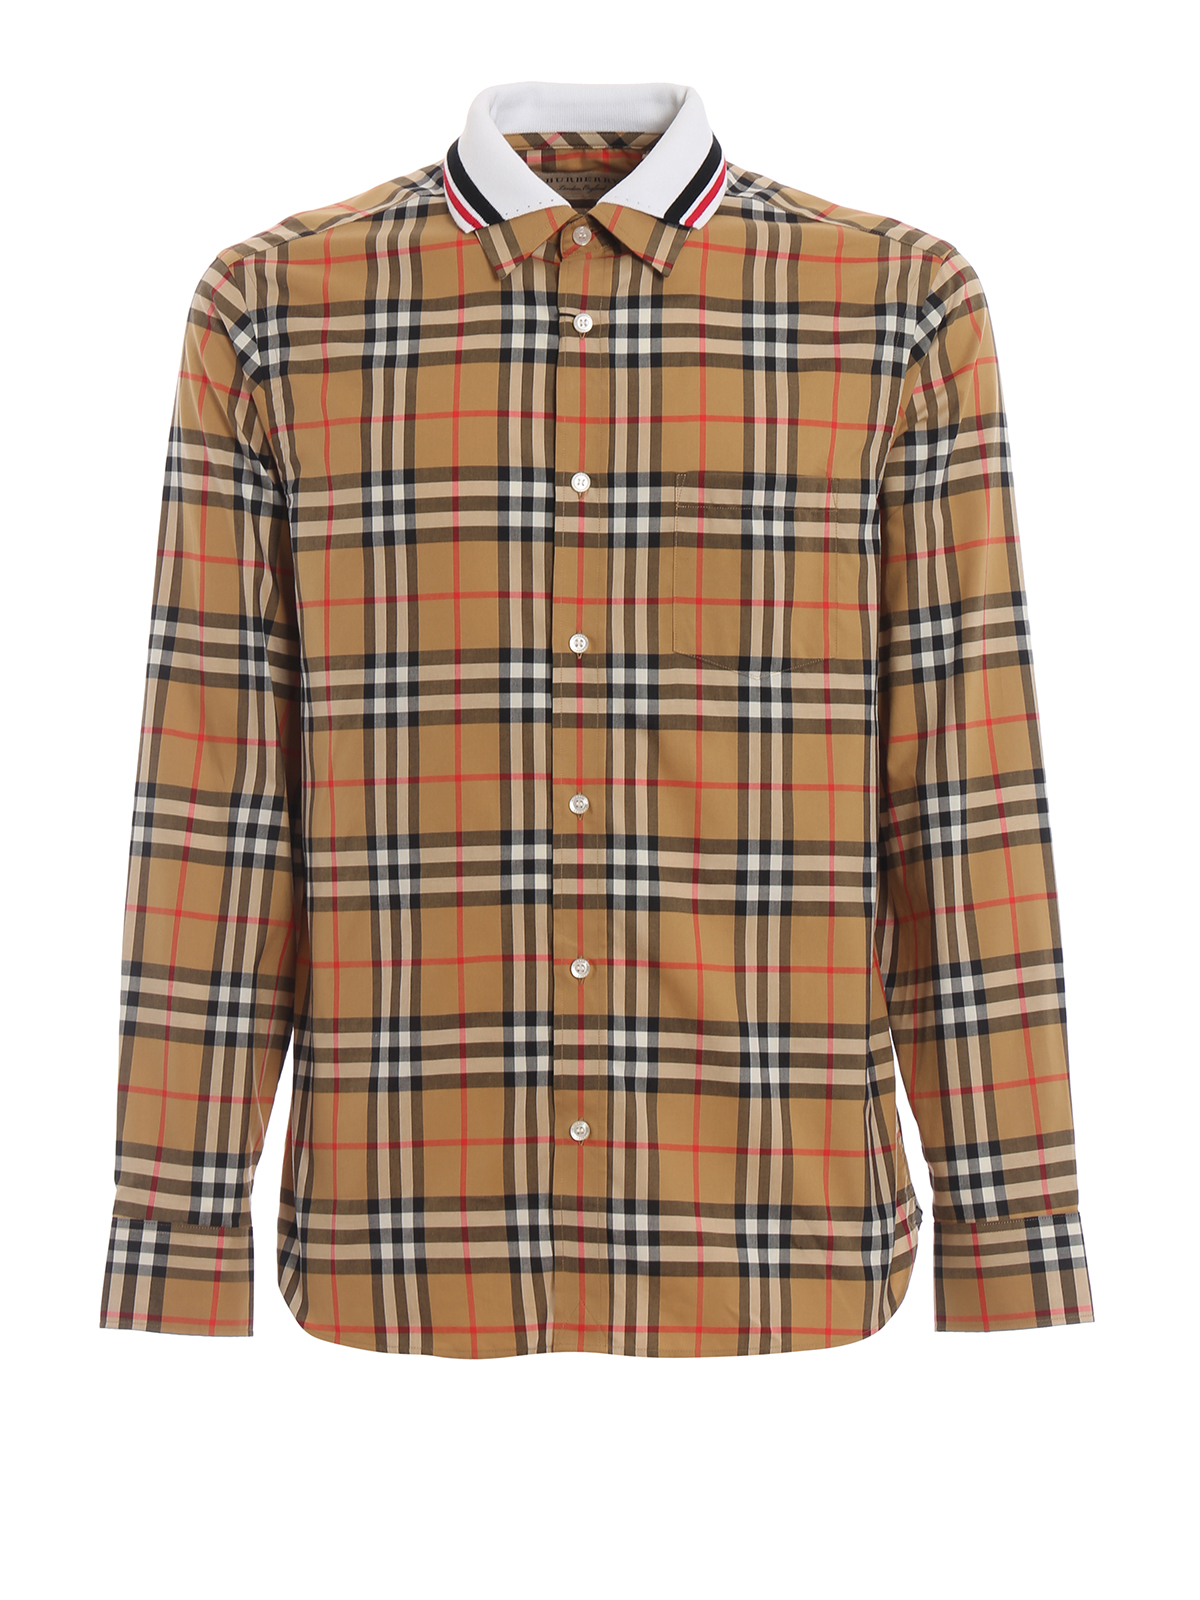 Shirts Burberry - Edward knitted collar shirt - 8004962 | iKRIX.com